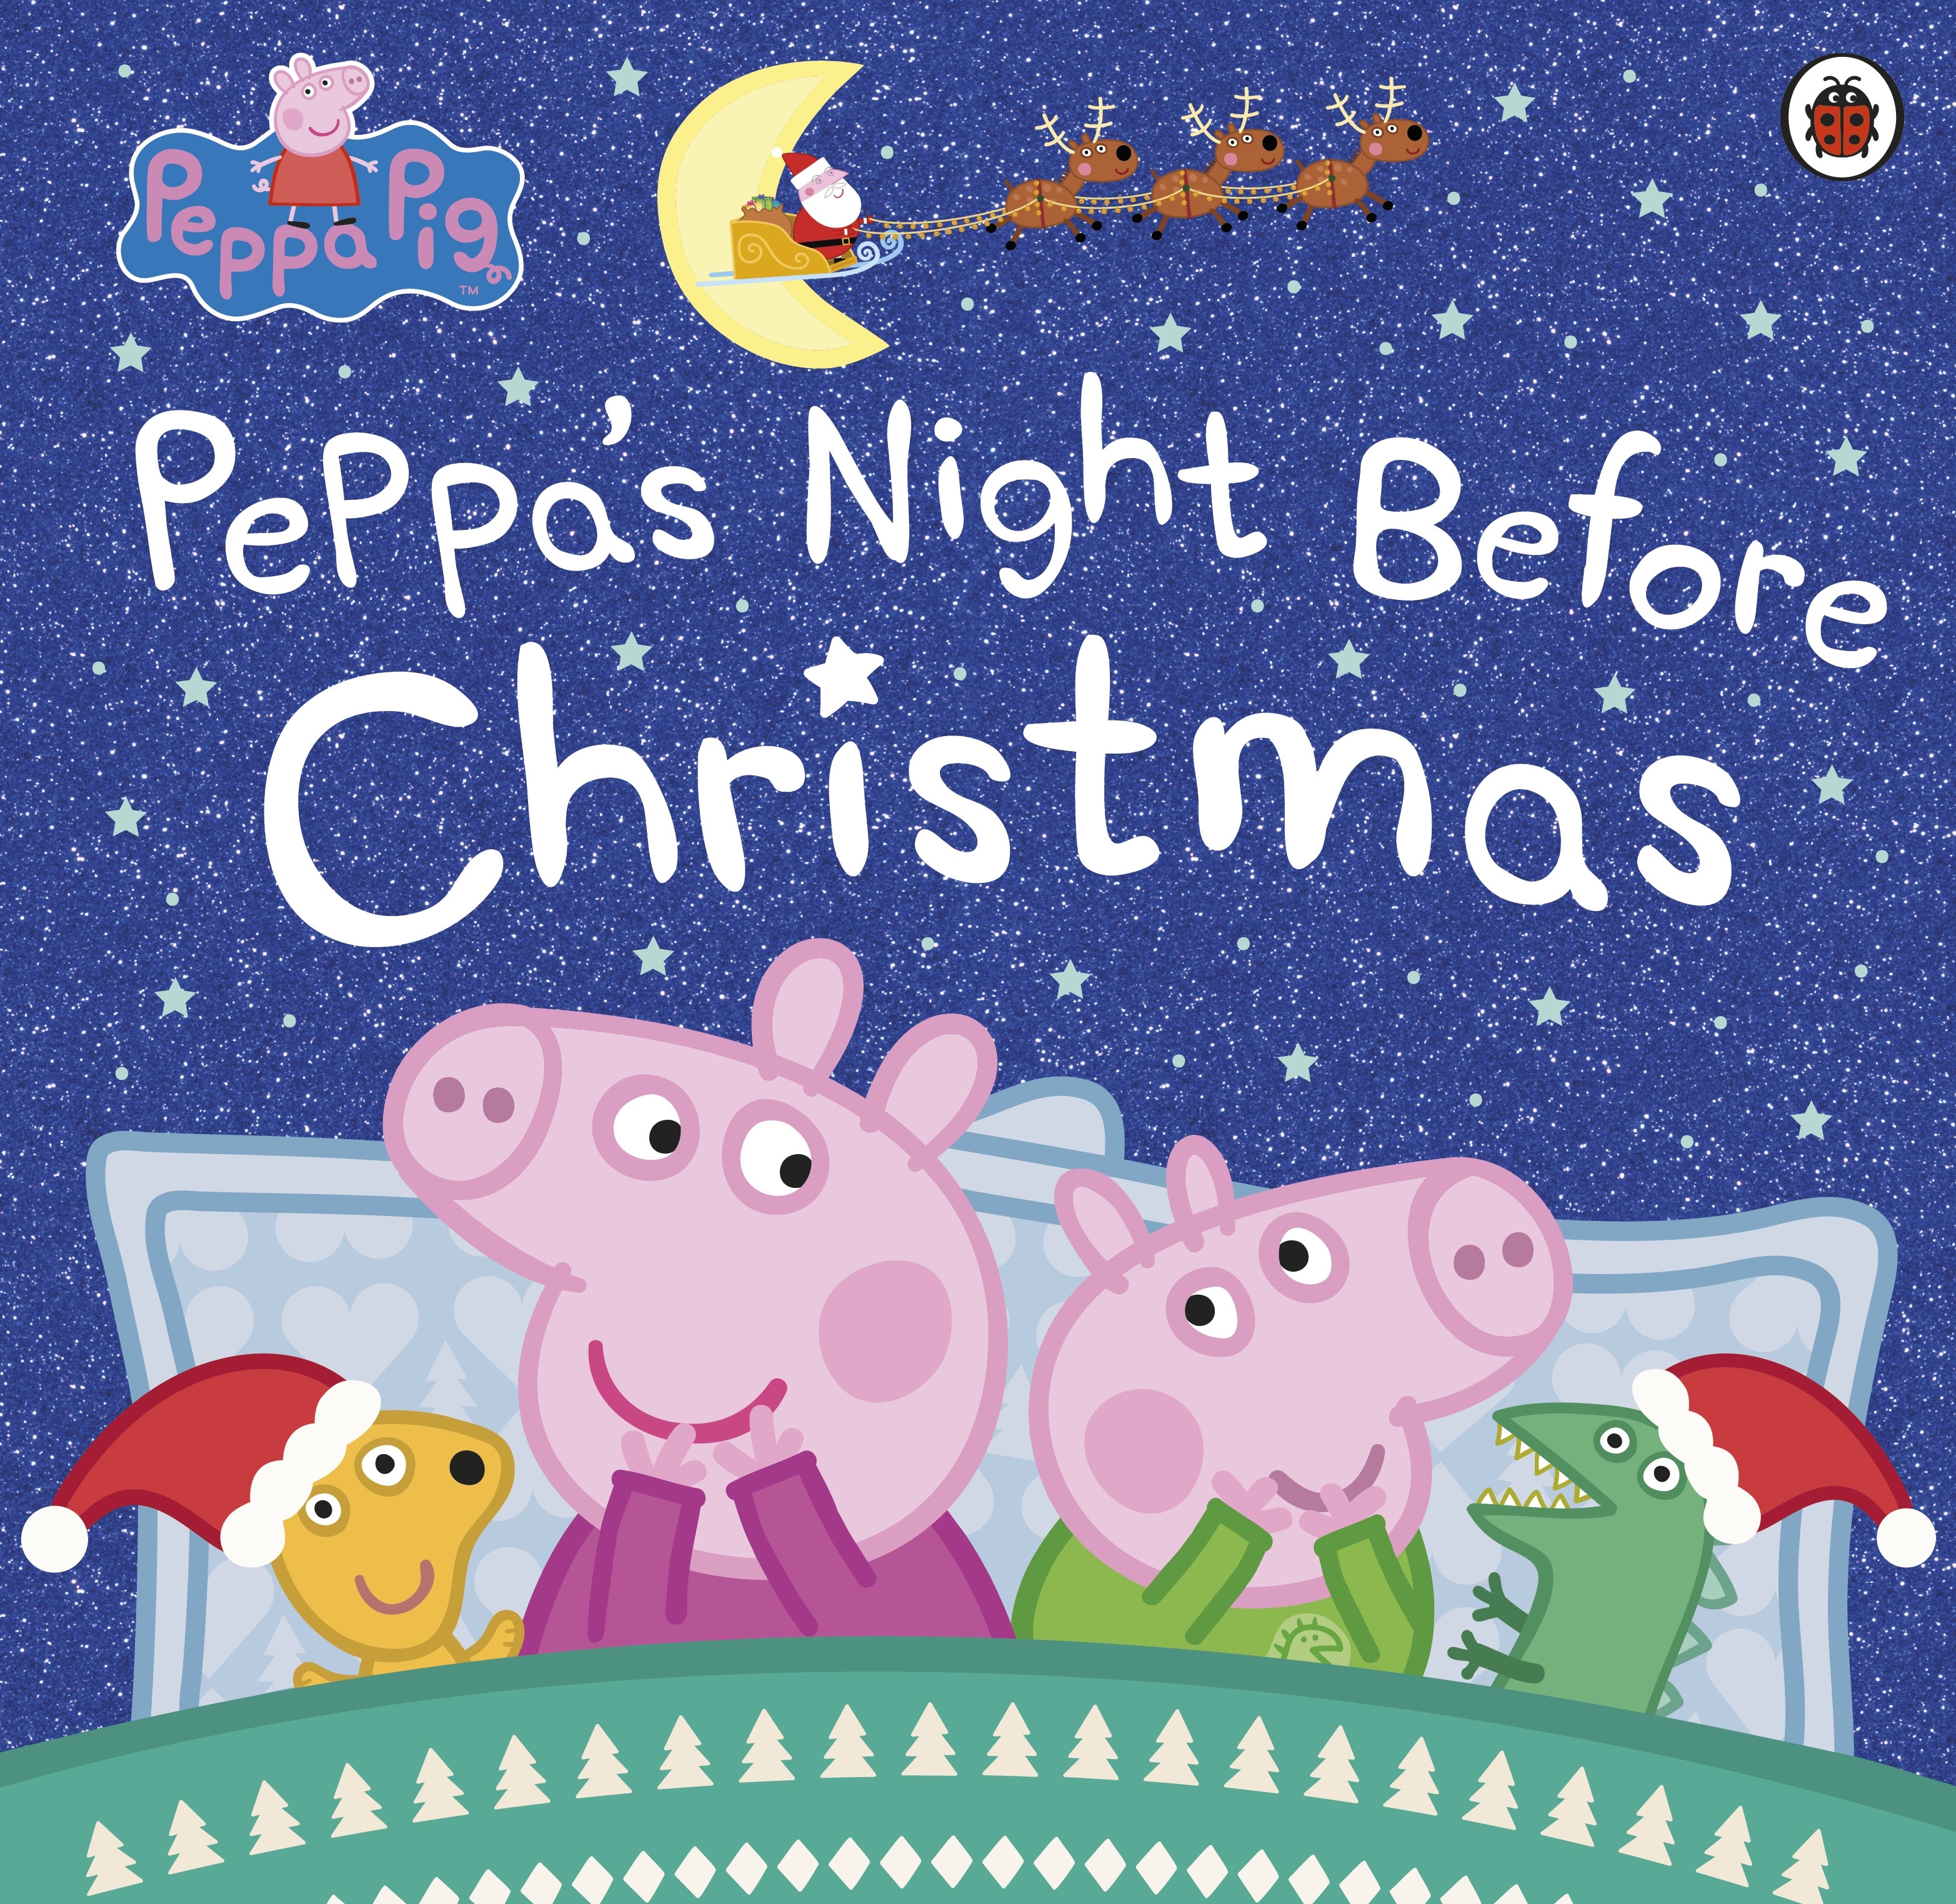 Book “Peppa Pig: Peppa's Night Before Christmas” by Peppa Pig — October 29, 2020